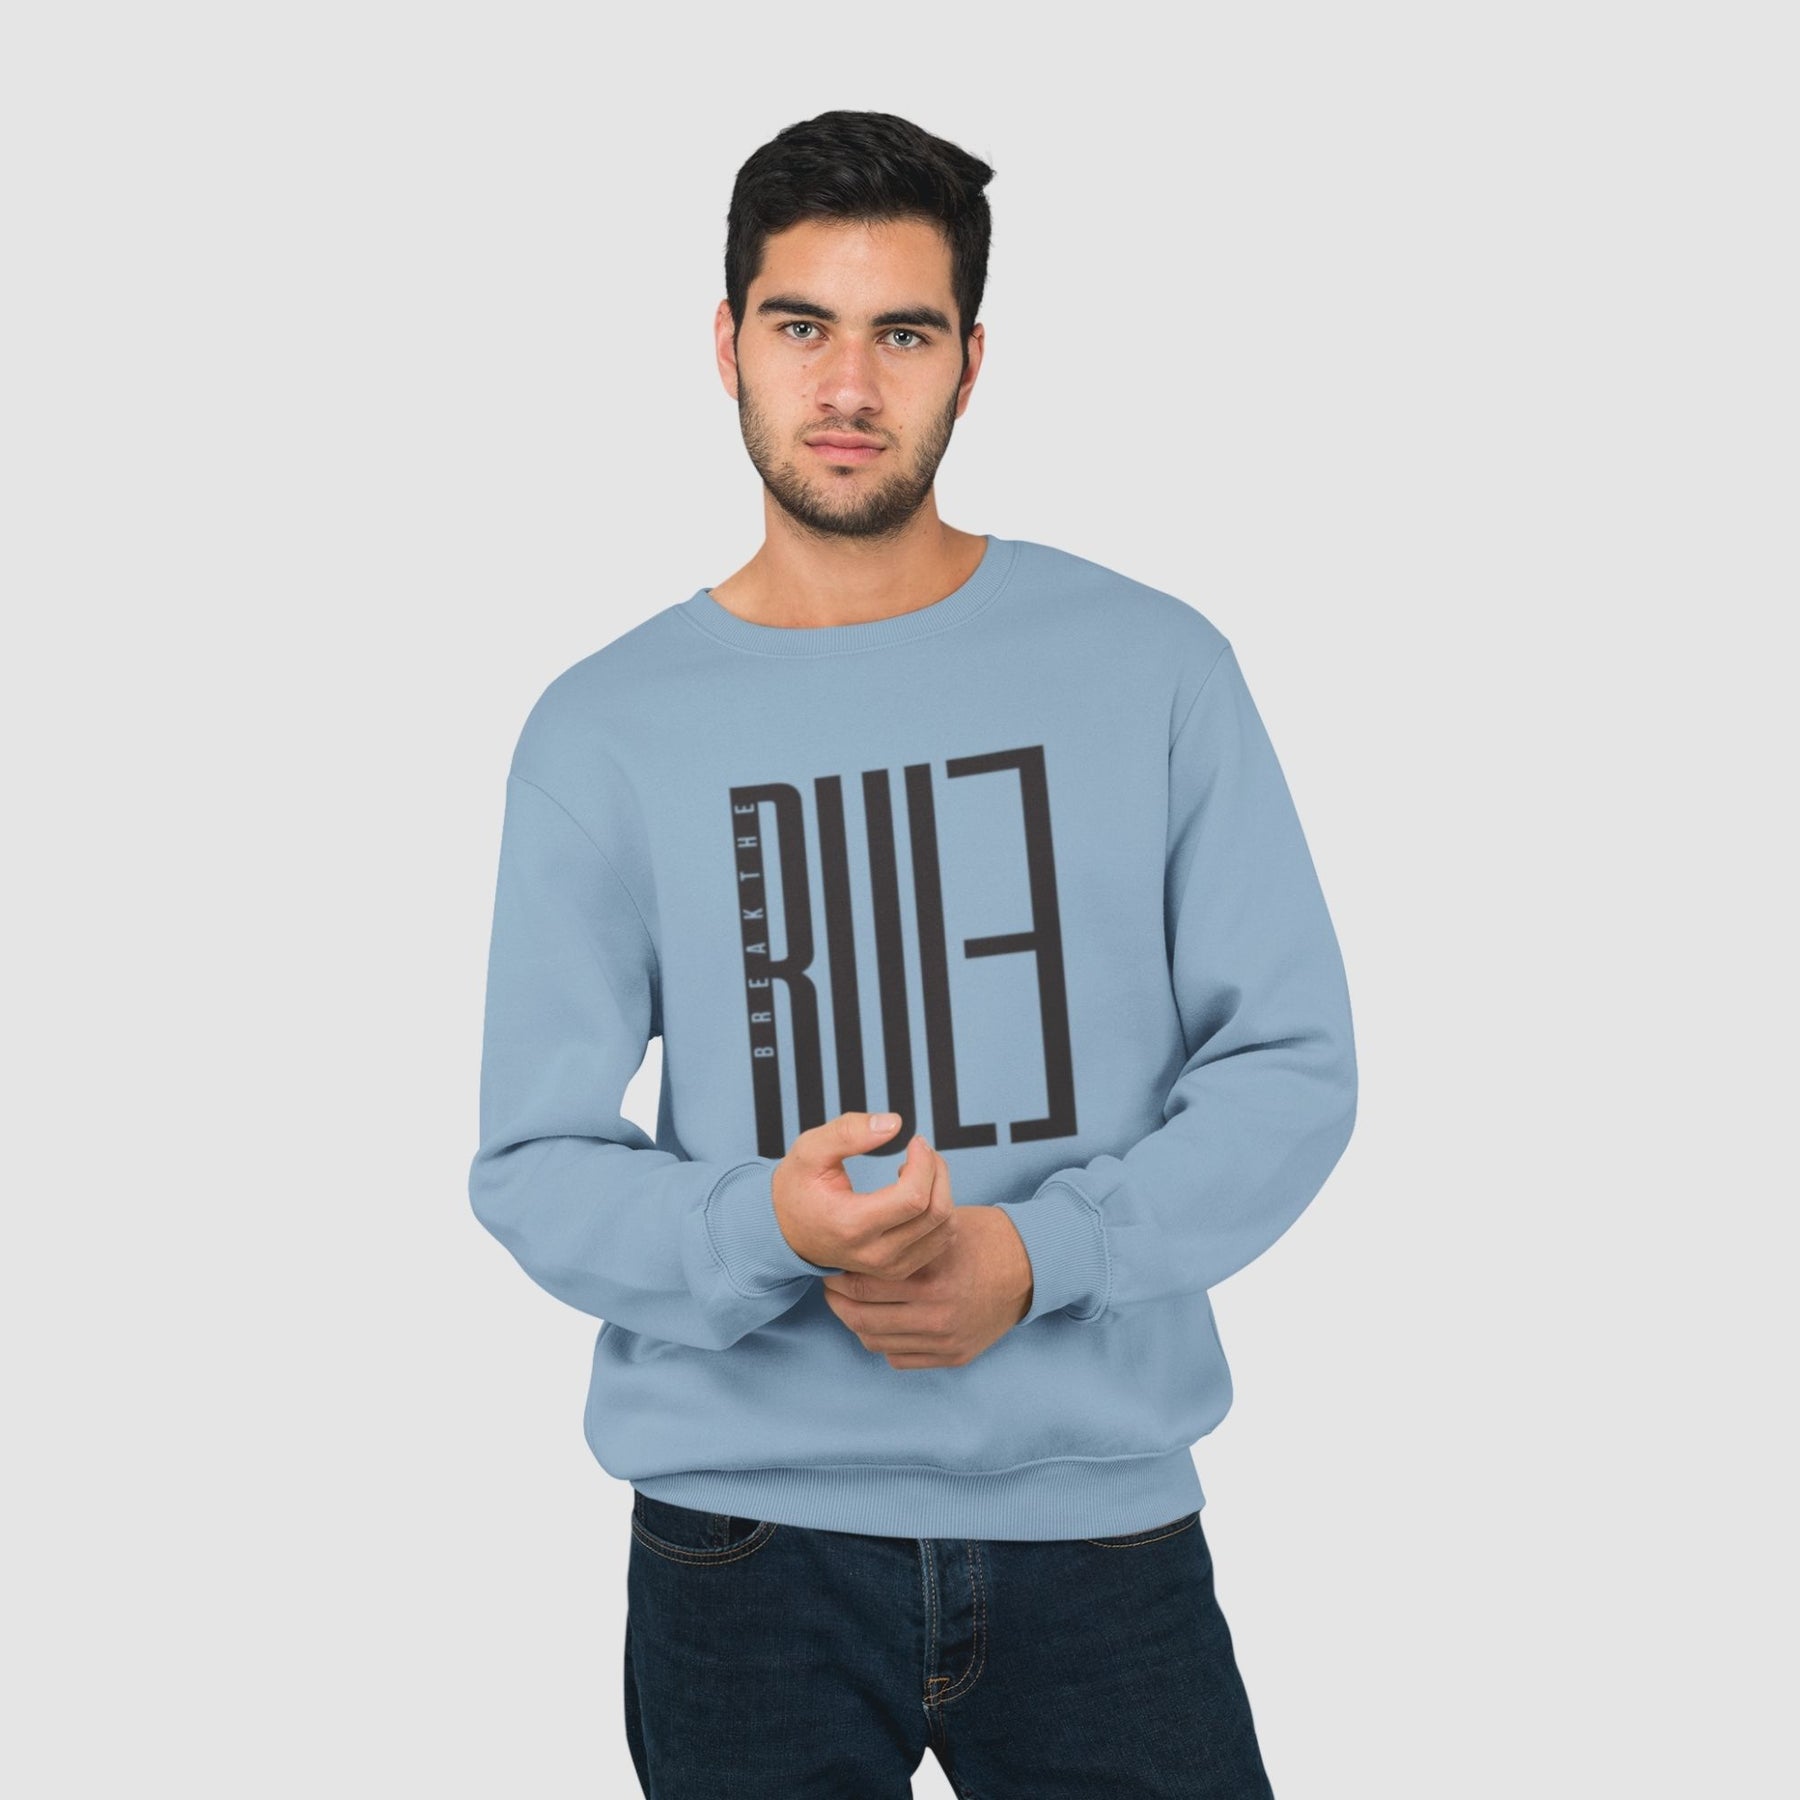 break-the-rule-cotton-printed-unisex-light-blue-men-model-sweatshirt-gogirgit-com